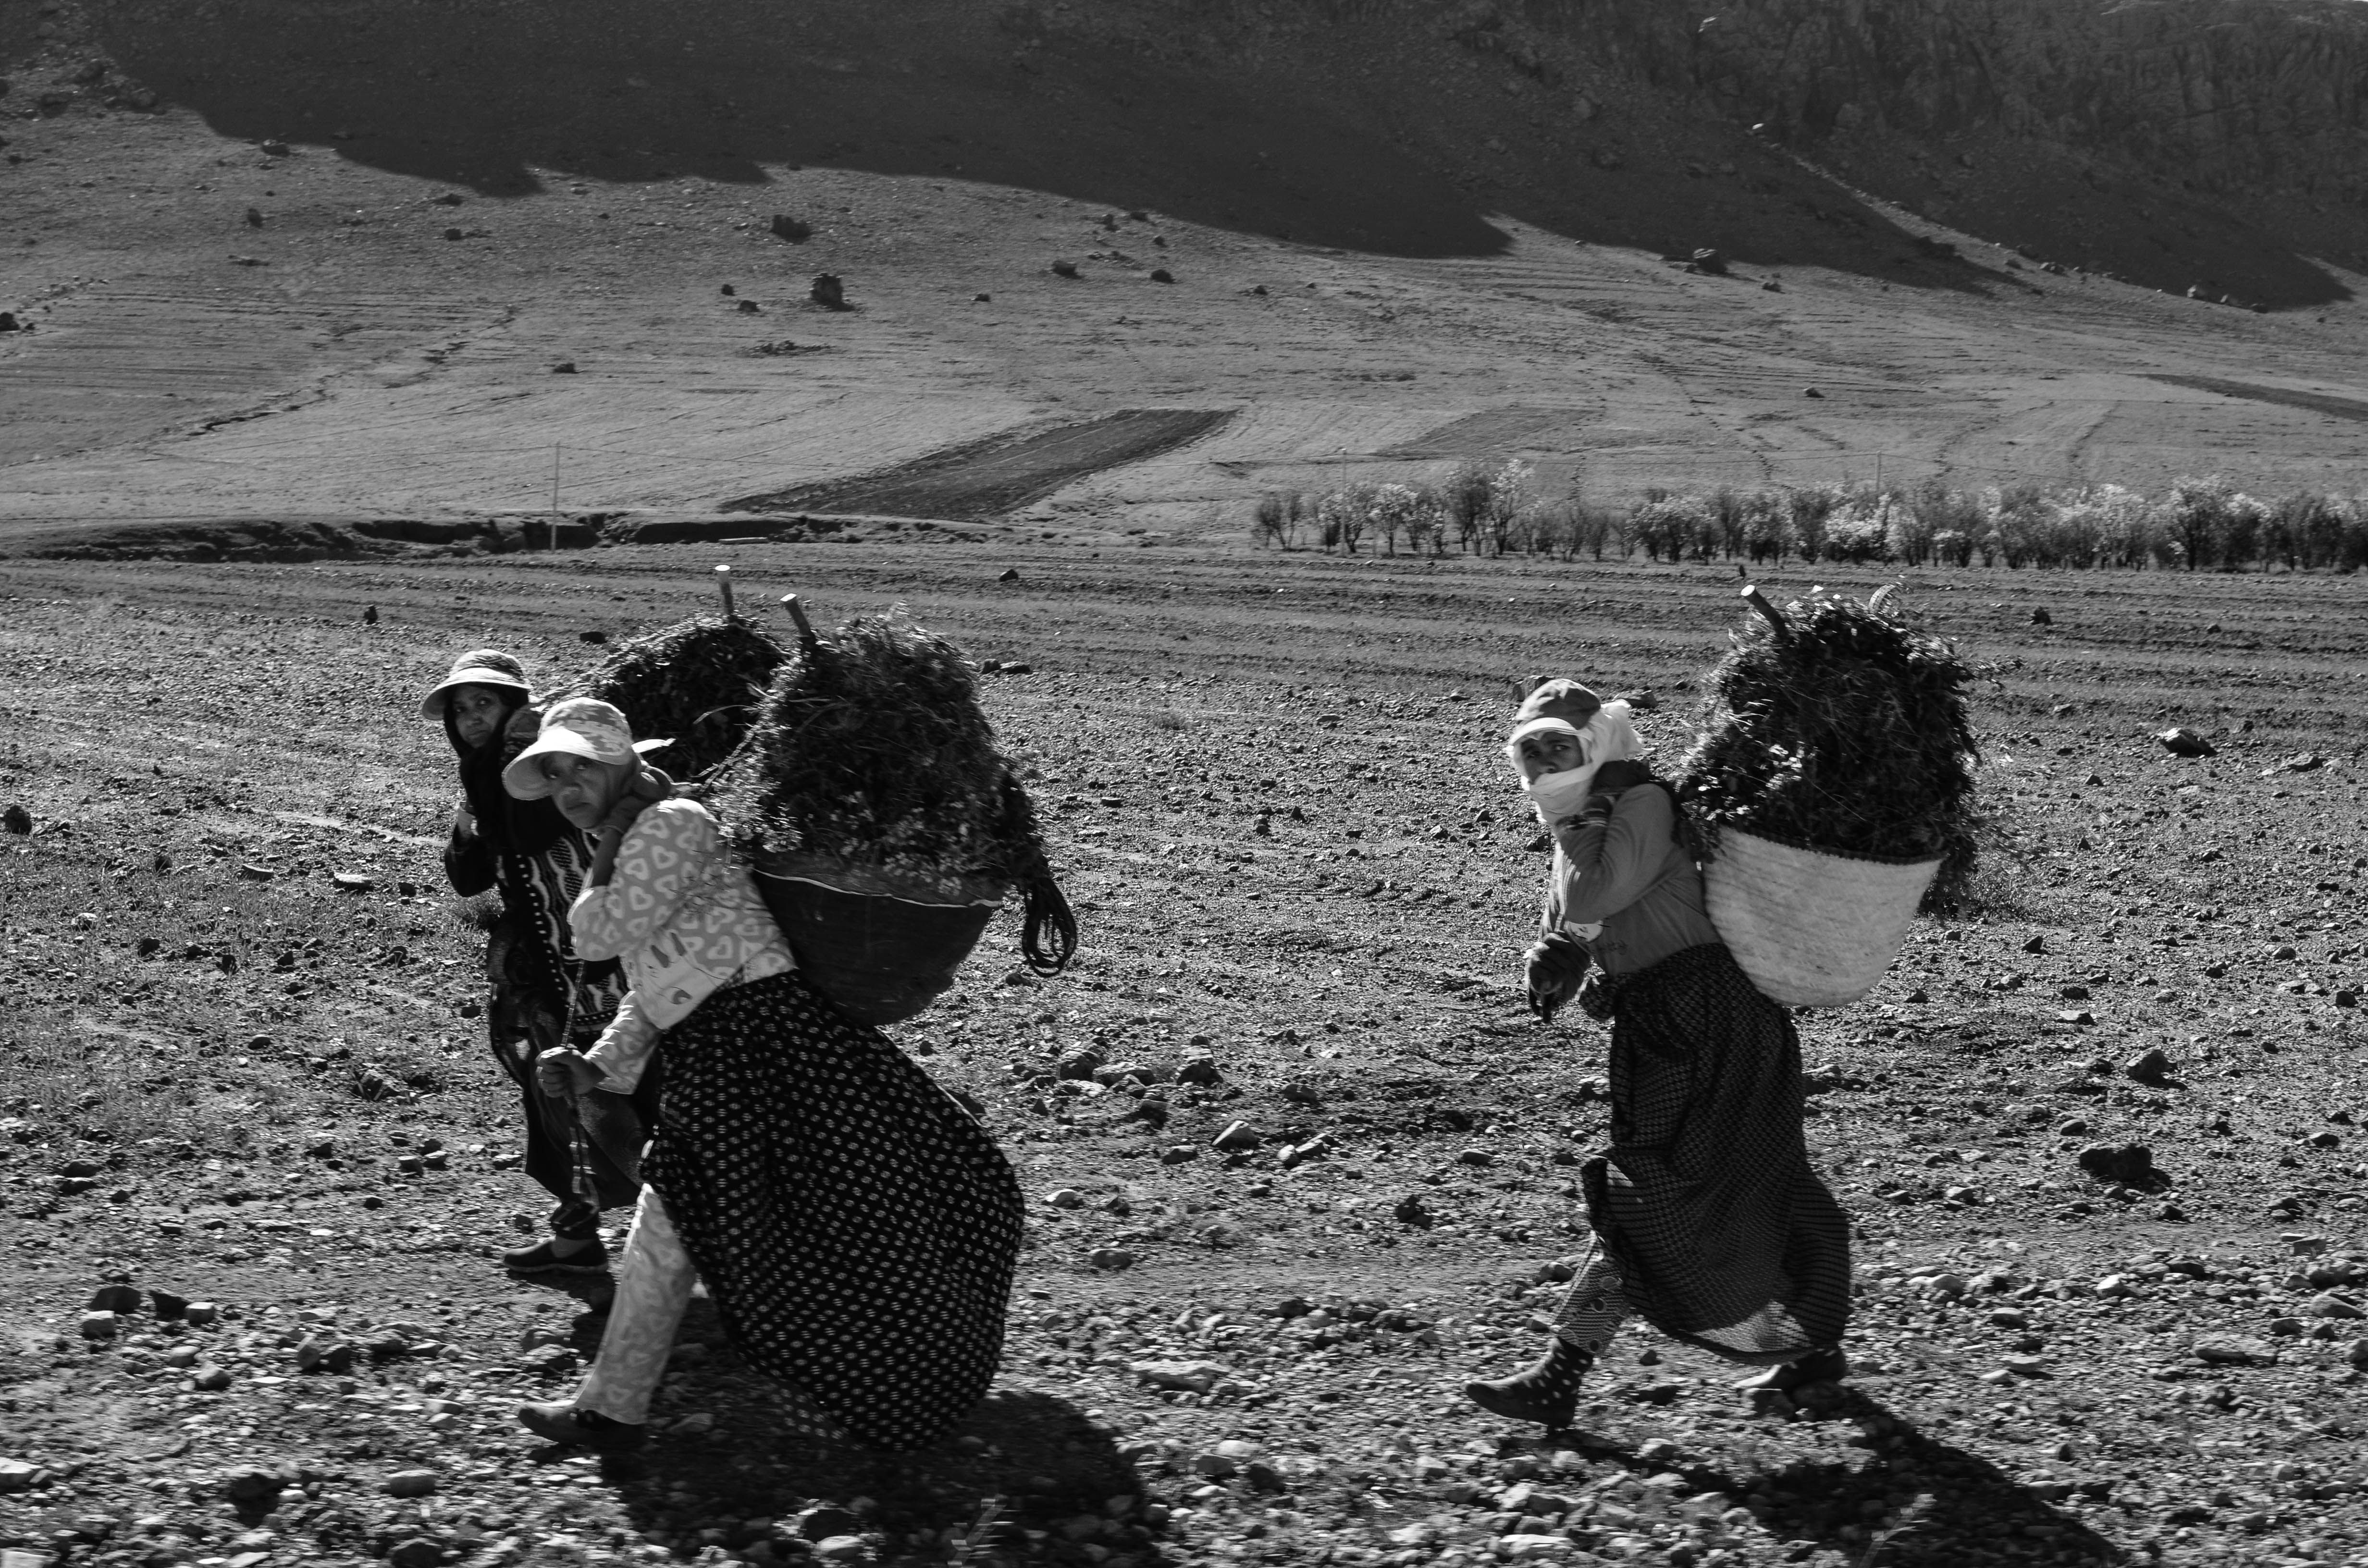 Photo by Elan Badminton of ladies carrying water in Morocco